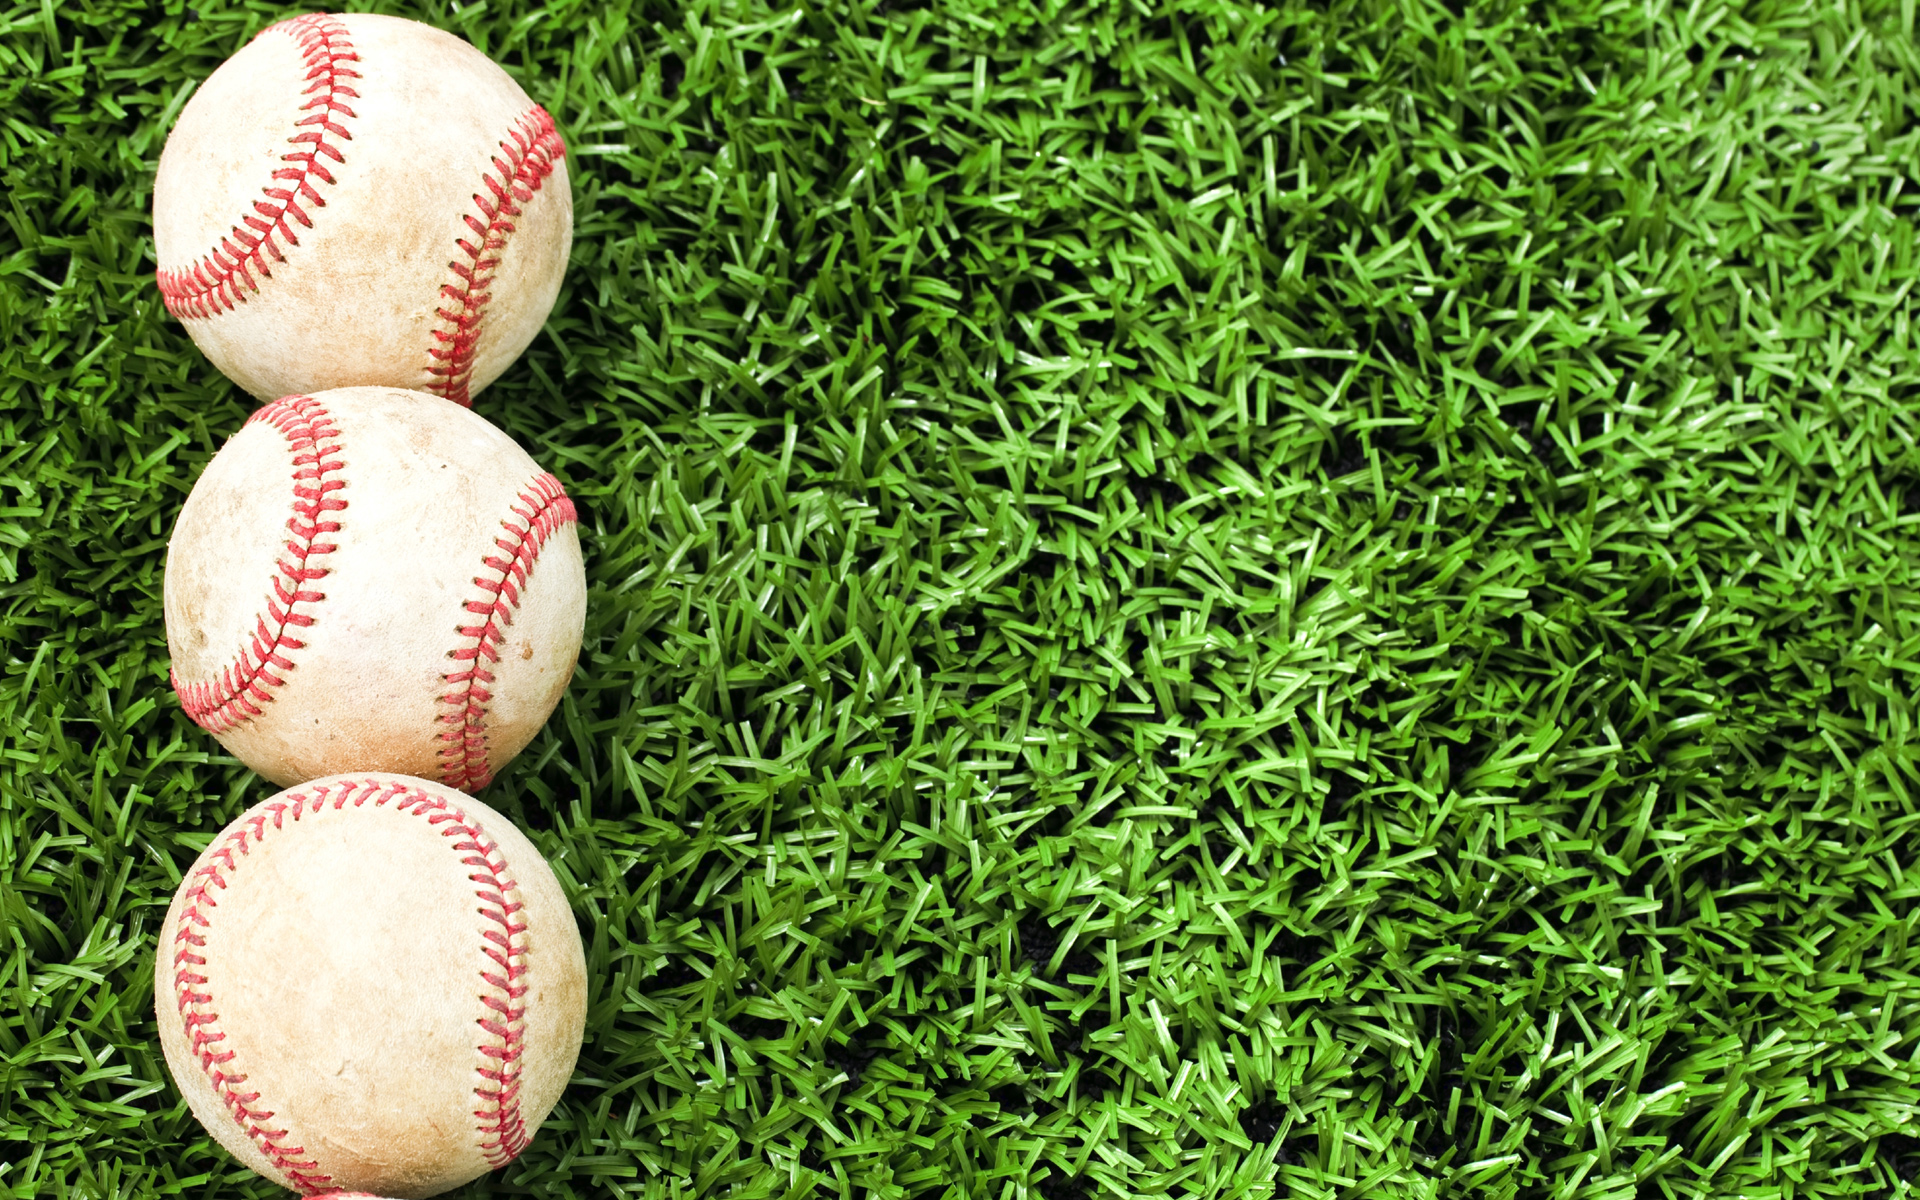 Baseballs laying in green grass